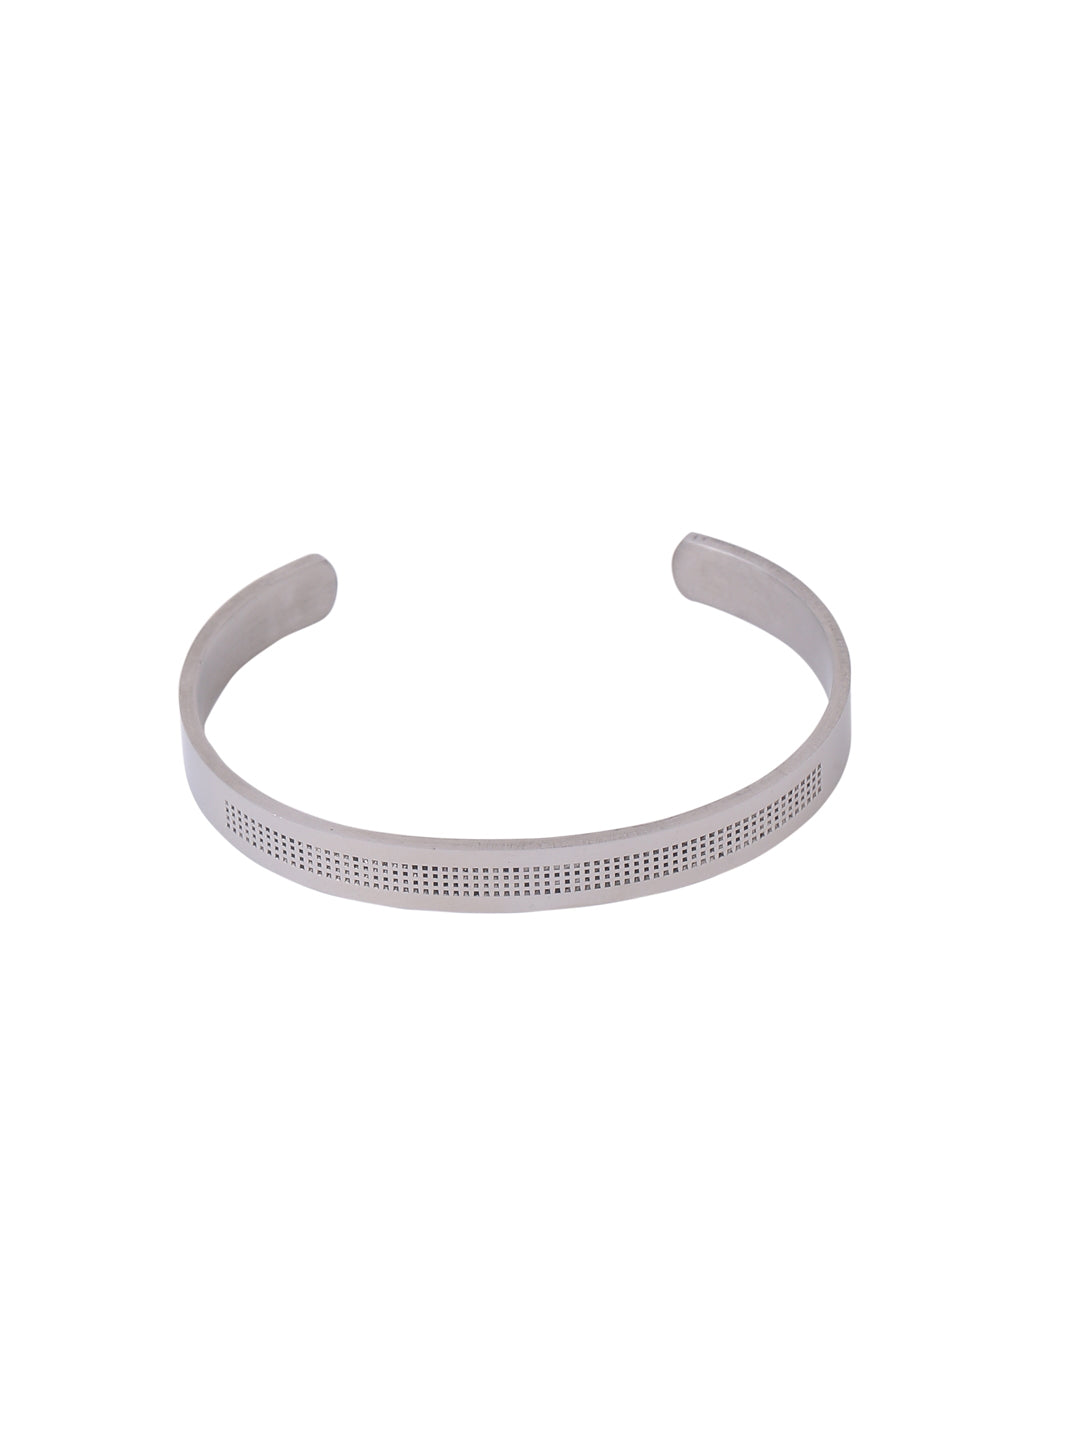 stainless-steel-unique-design-cuff-bracelet-viraasi